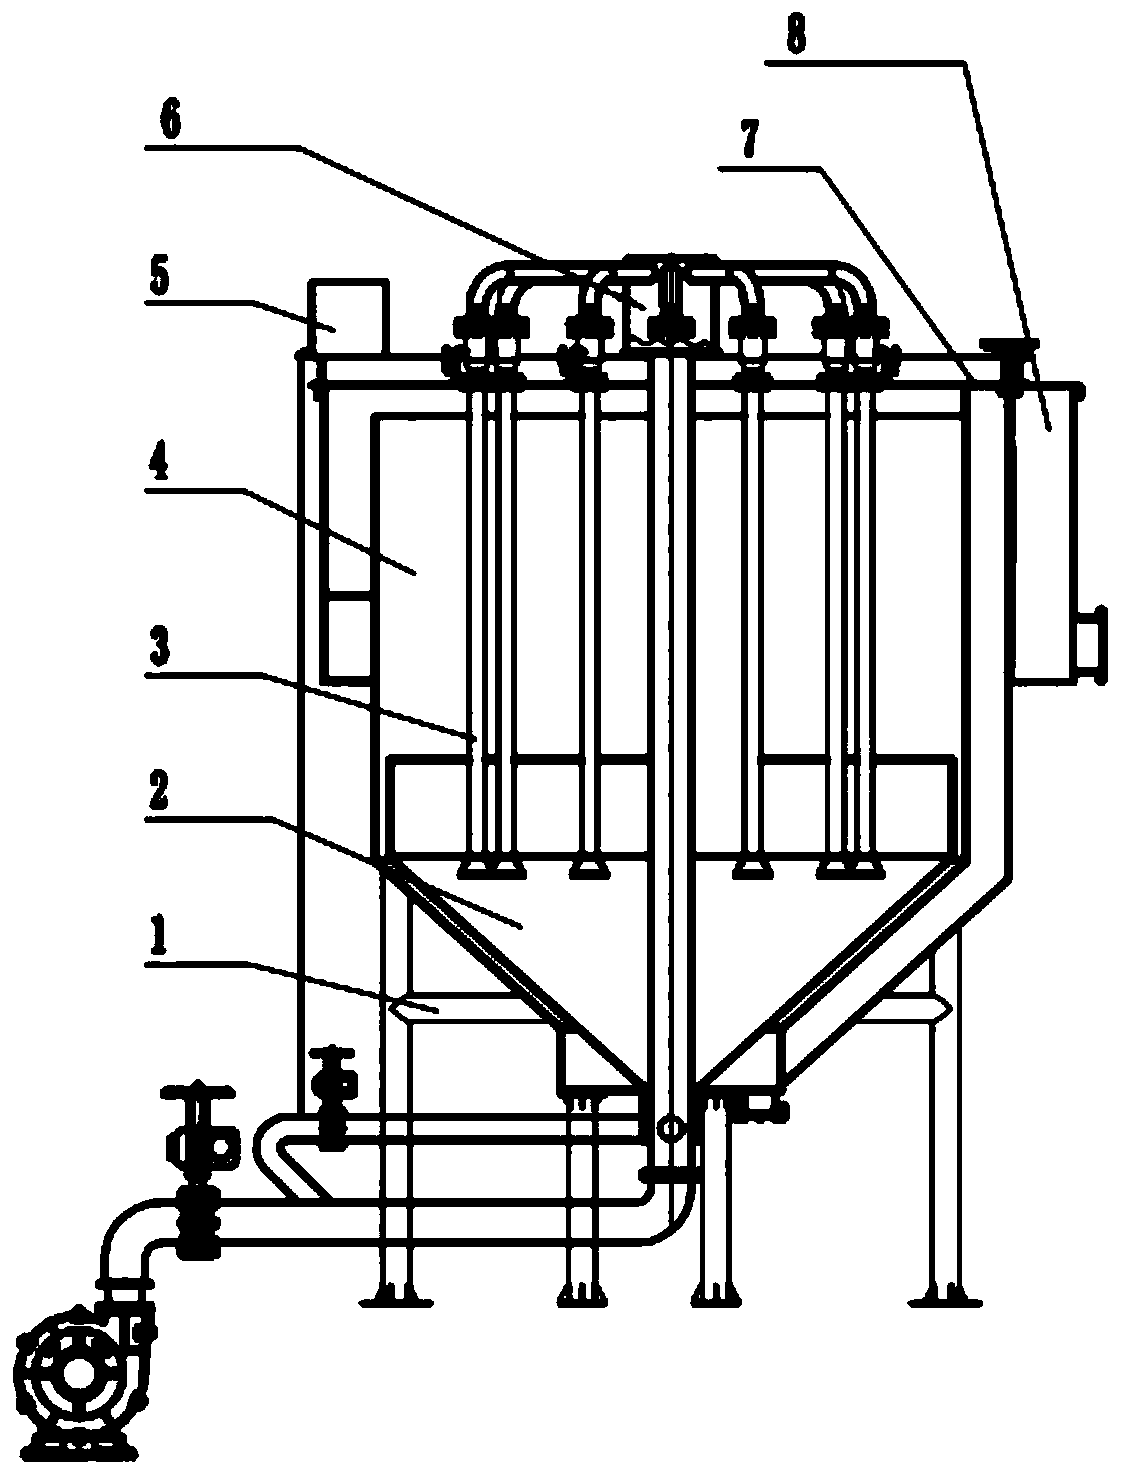 Jet-type short-column flotation machine